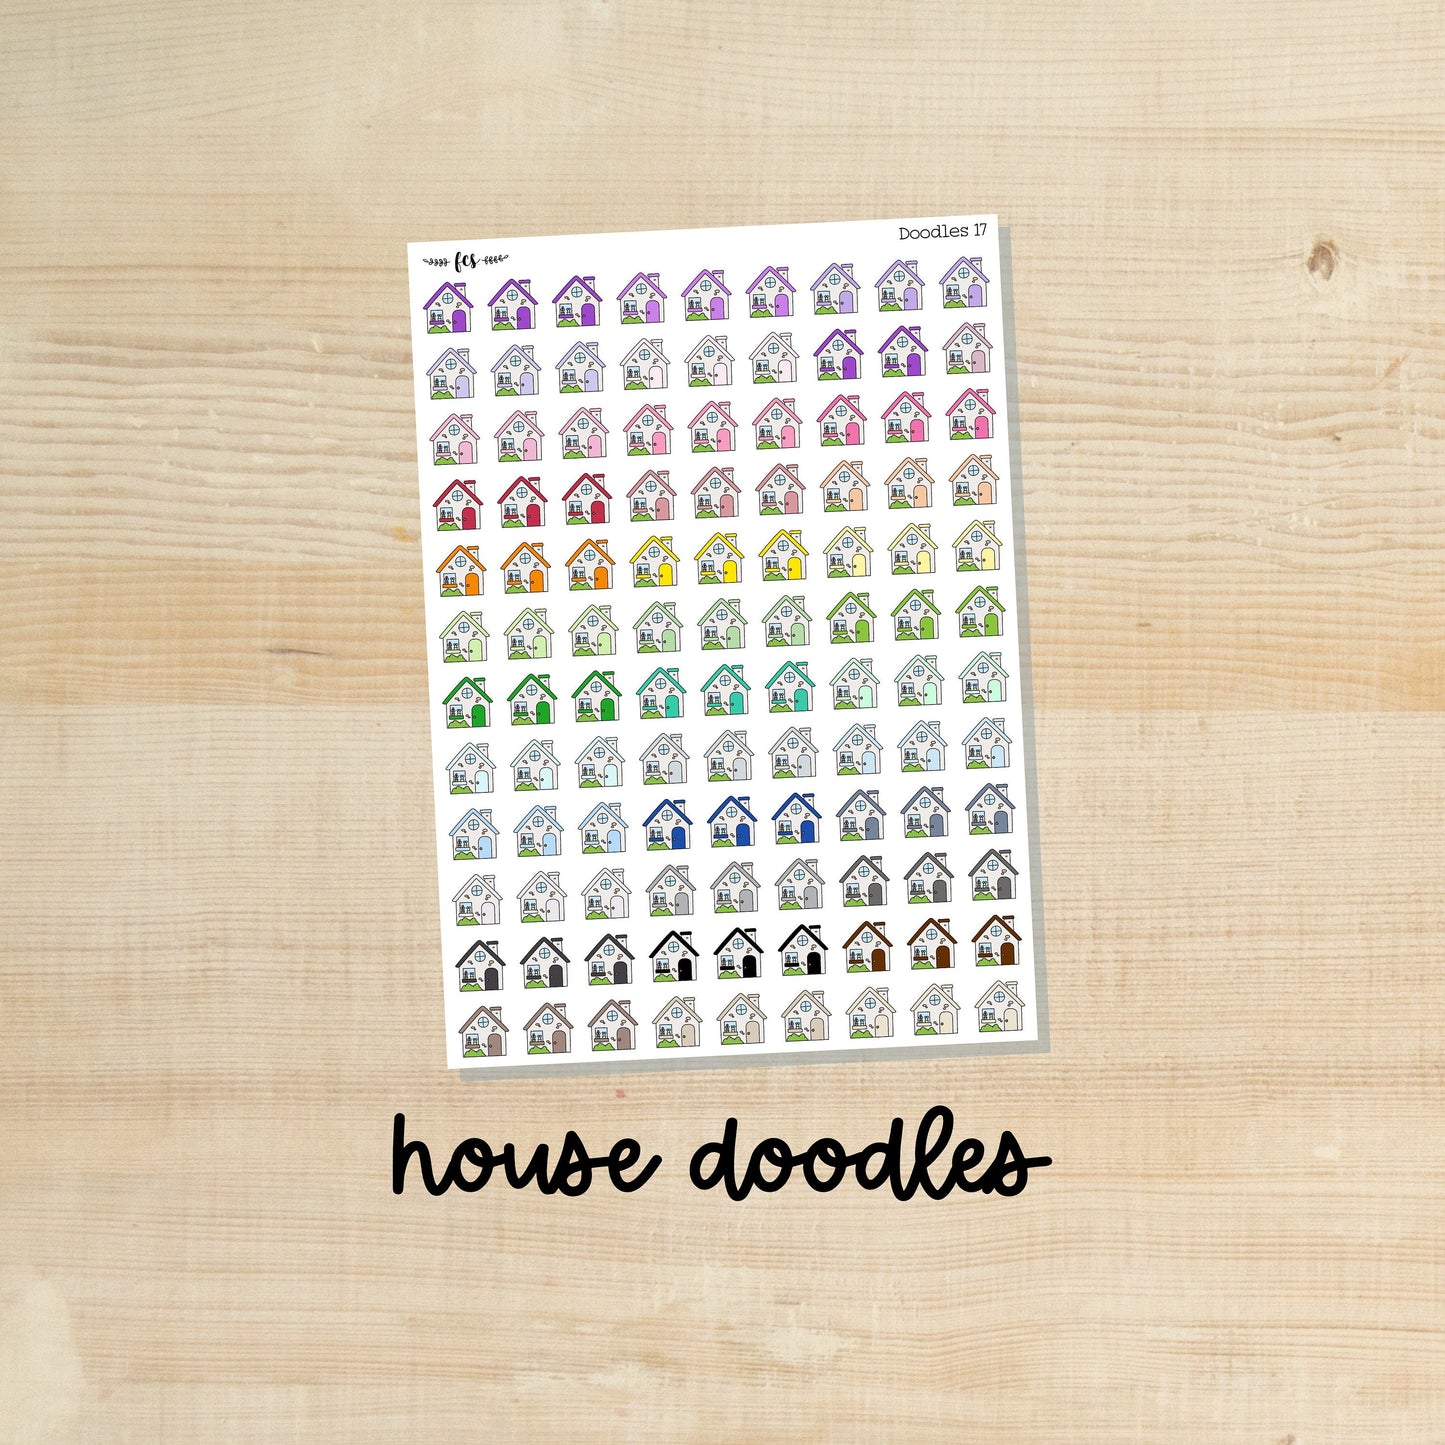 DOODLES-17 || HOUSE doodle planner stickers